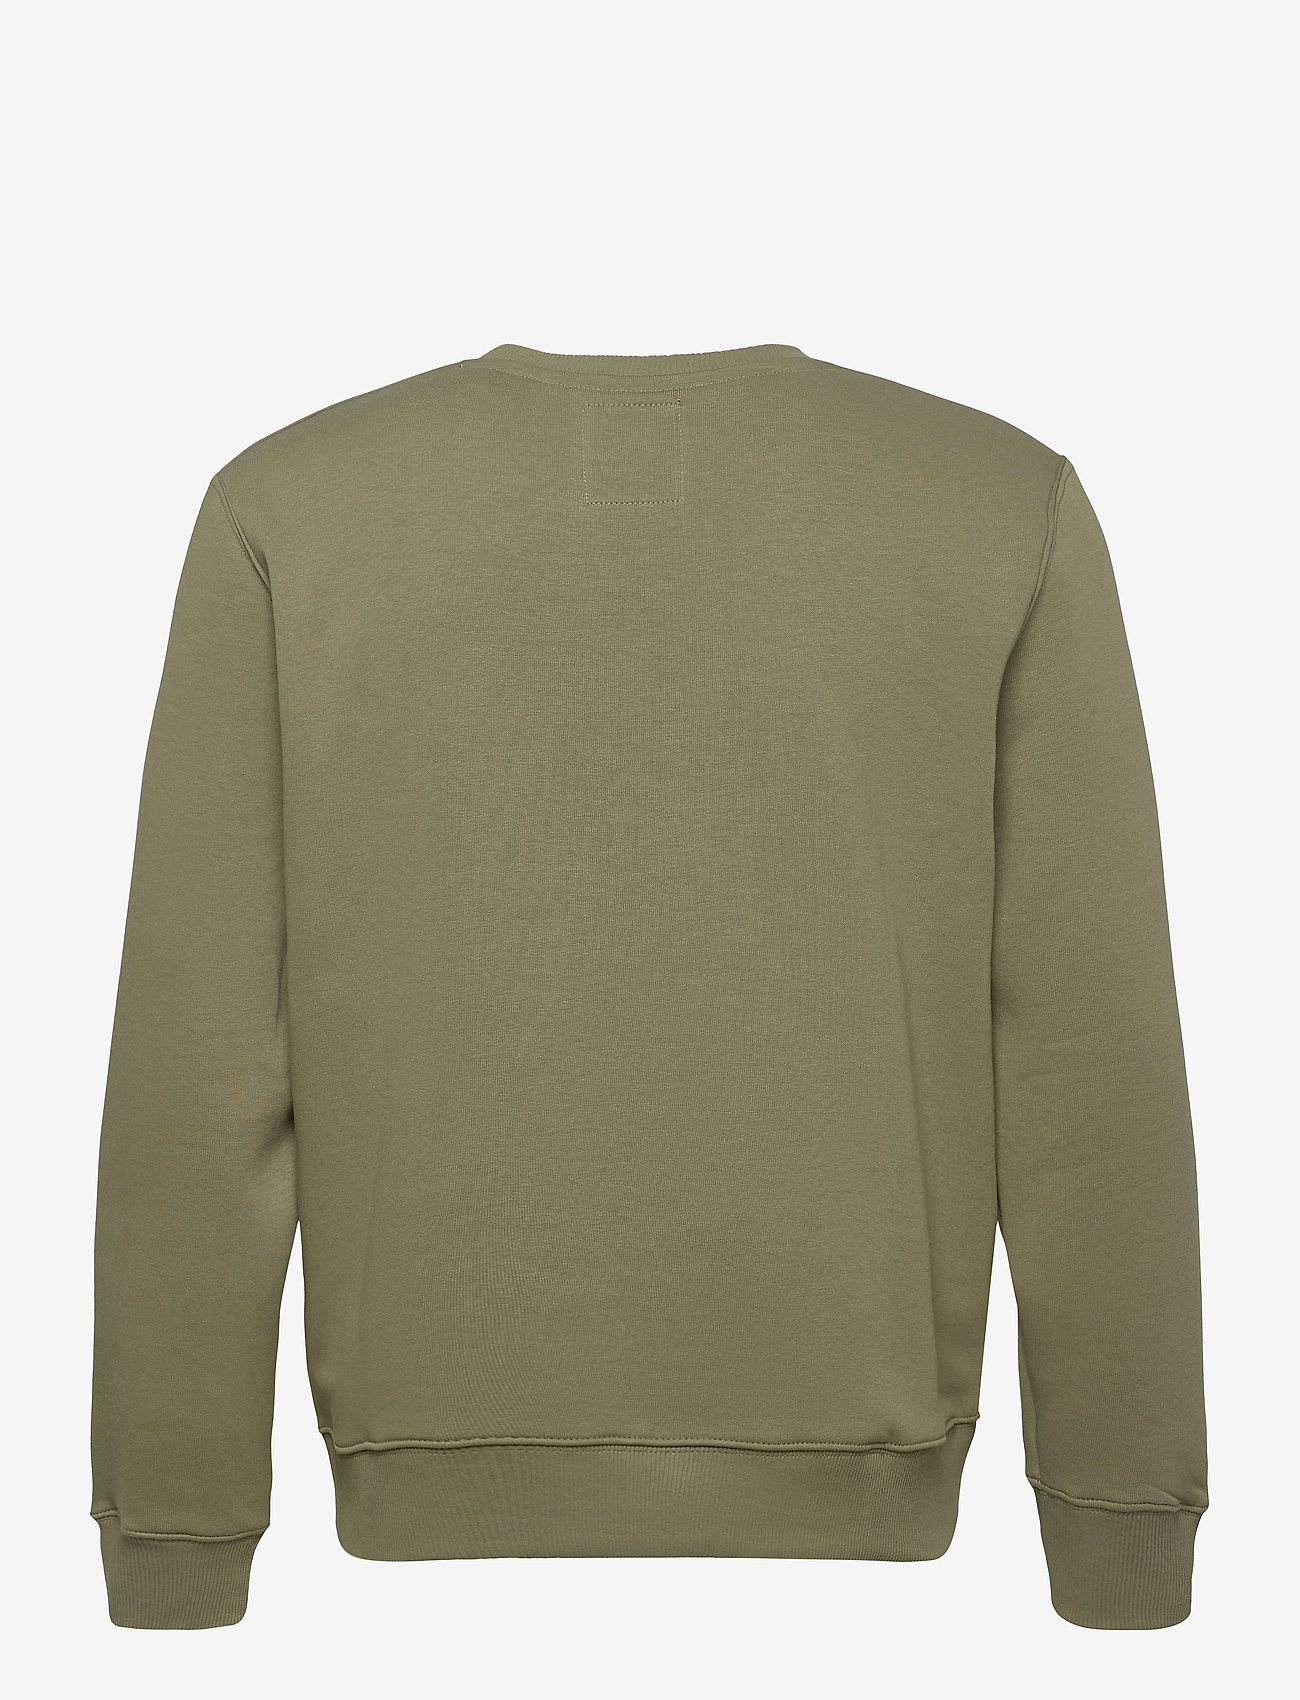 Alpha Industries - Basic Sweater - huvtröjor - olive - 1